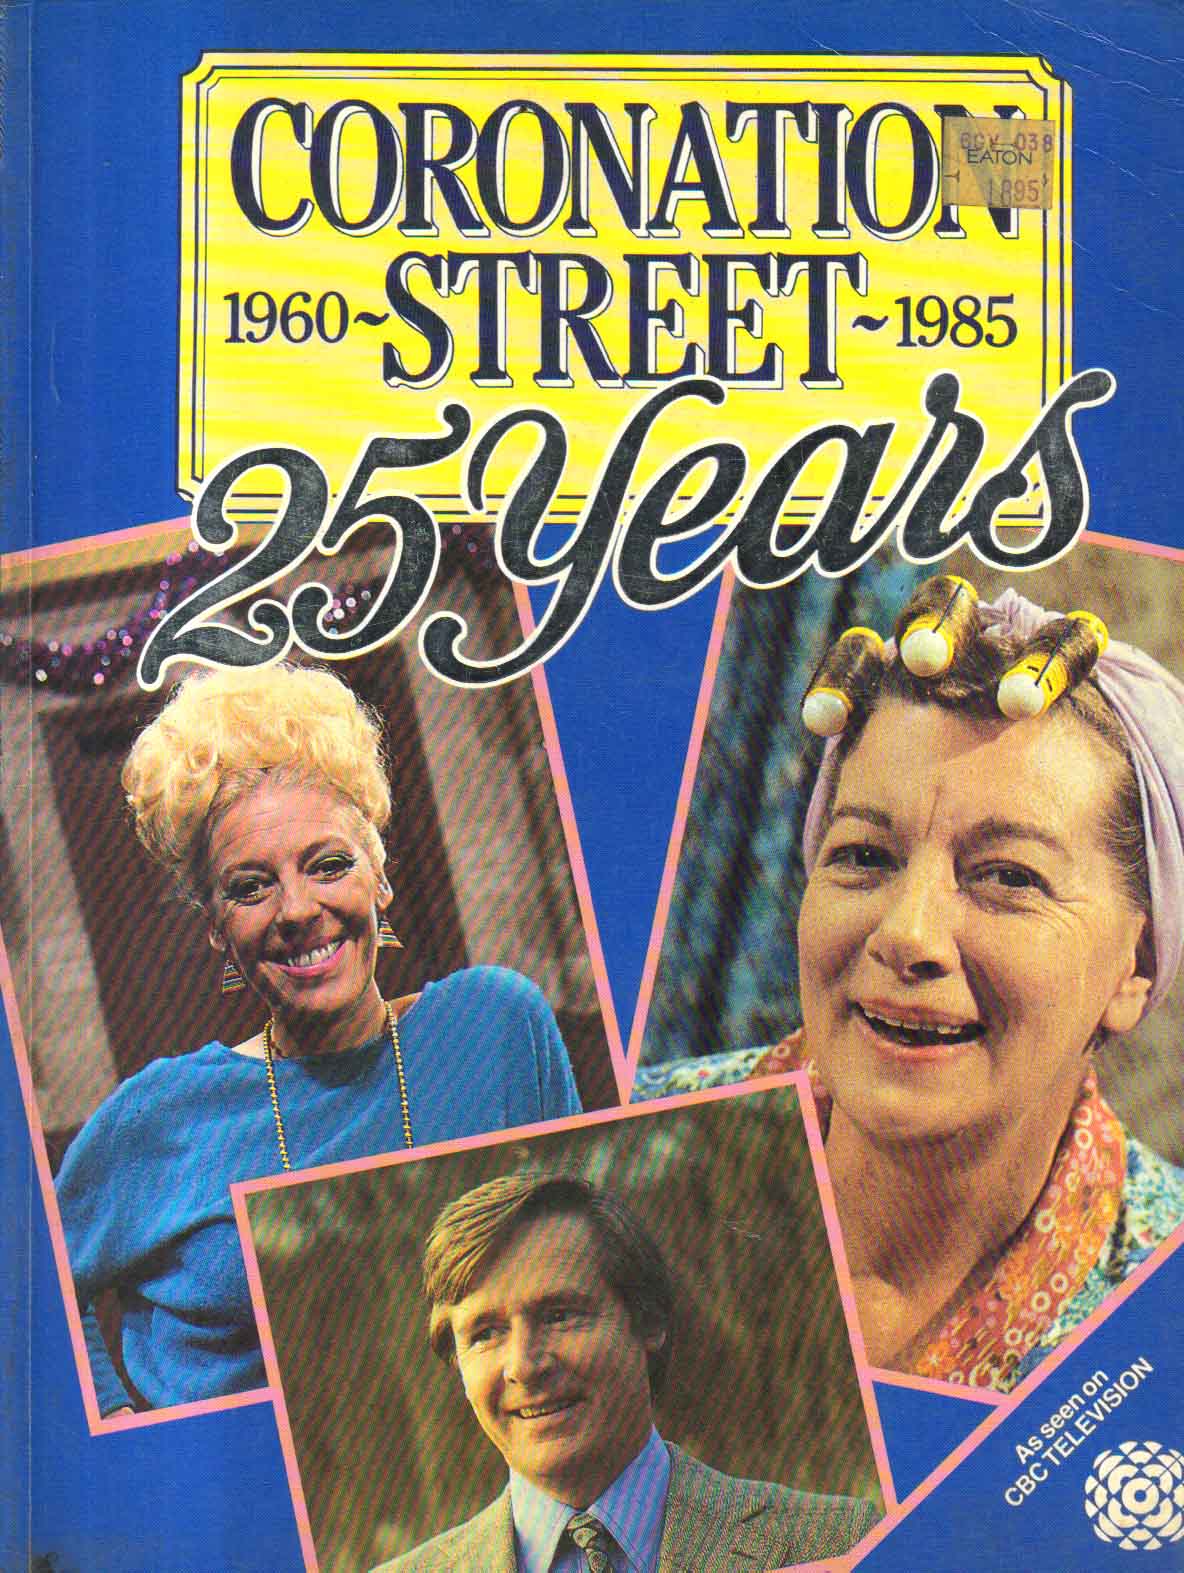 Coronation Street 1960-1985